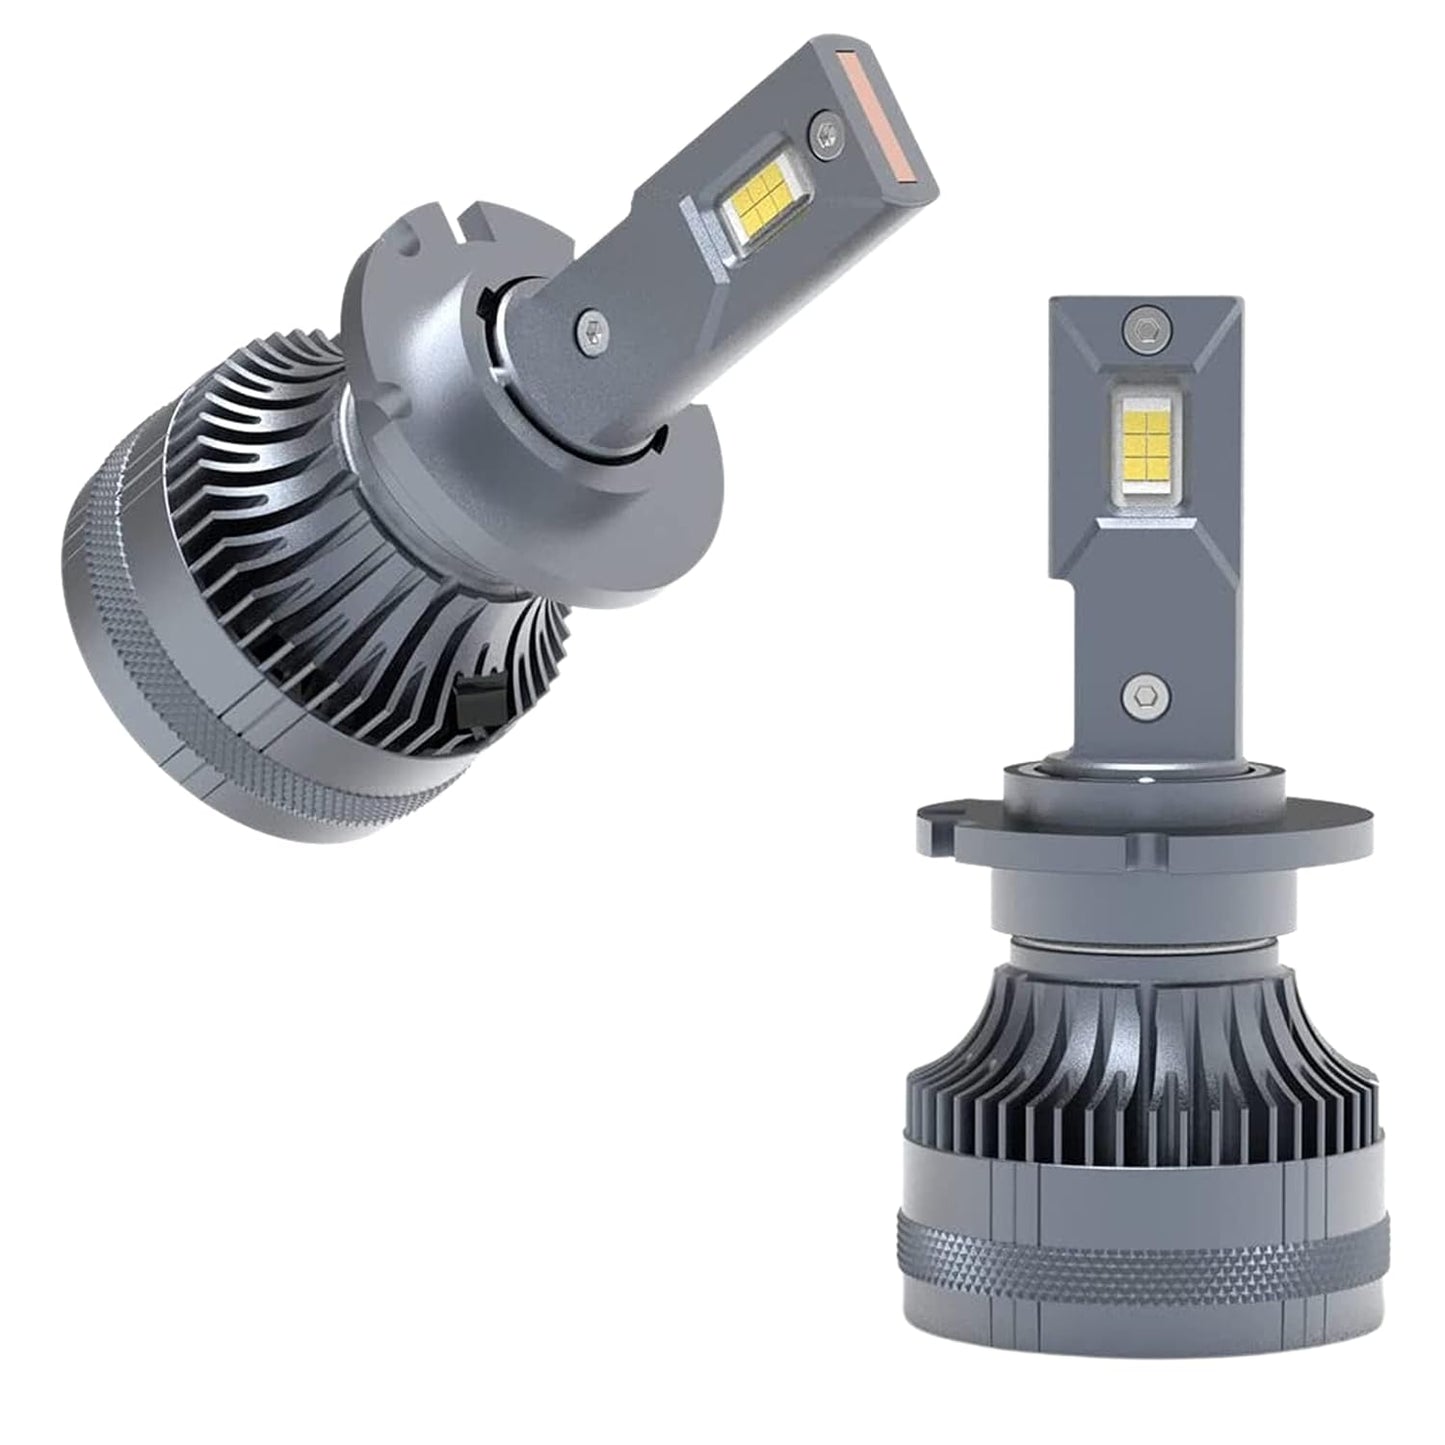 Potauto High Brightness 12V LED Headlight Bulb With Various 50W, 64W, 130W, 160W, 210W, 300W Wattage For Car & 4 Wheeler Vehicle